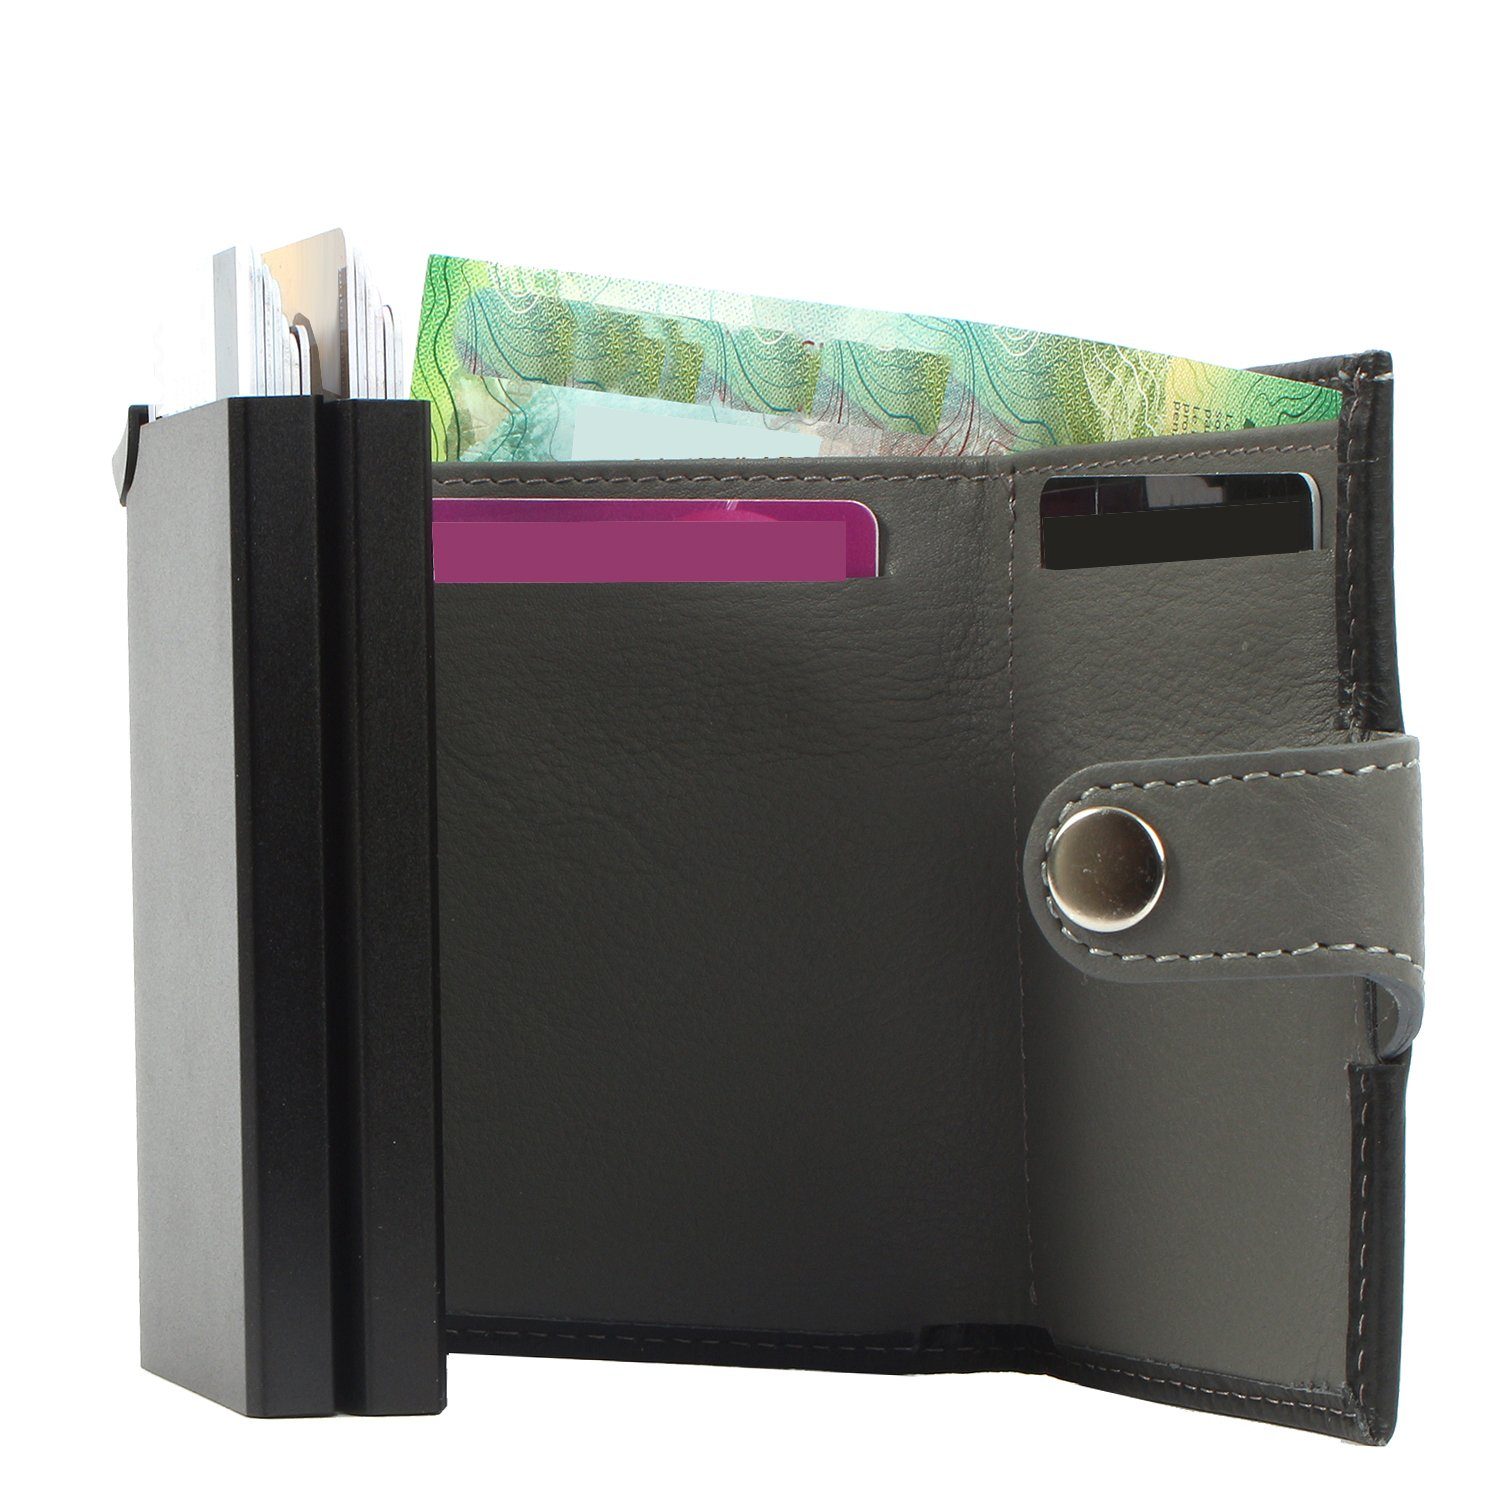 Leder Mini aus salmon Kreditkartenbörse RFID noonyu leather, double Margelisch Geldbörse Upcycling